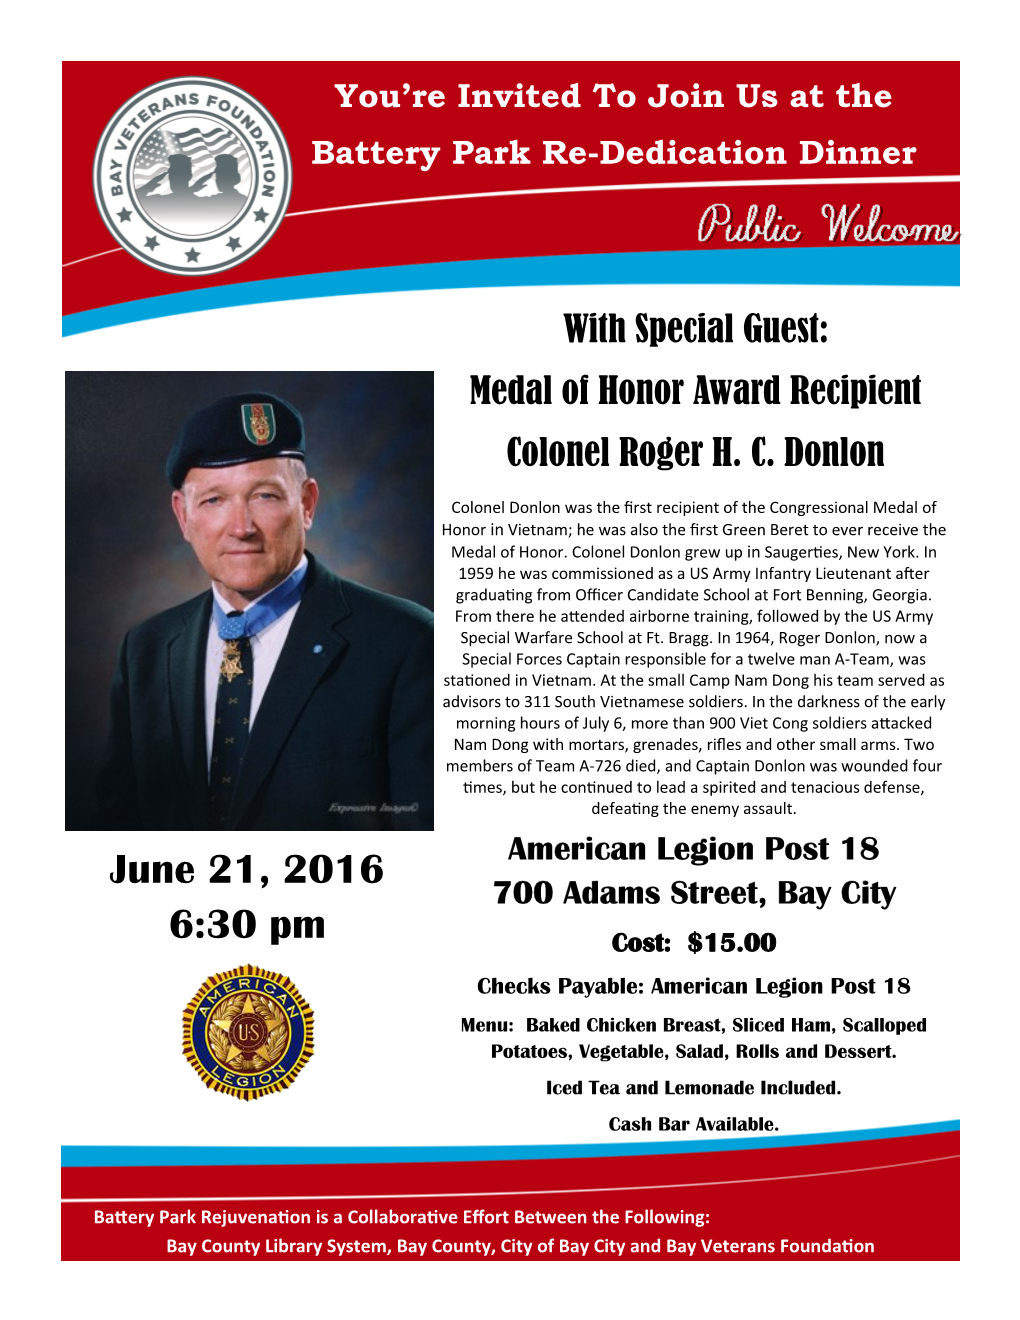 Medal of Honor Award Recipient Colonel Roger HC Donlon